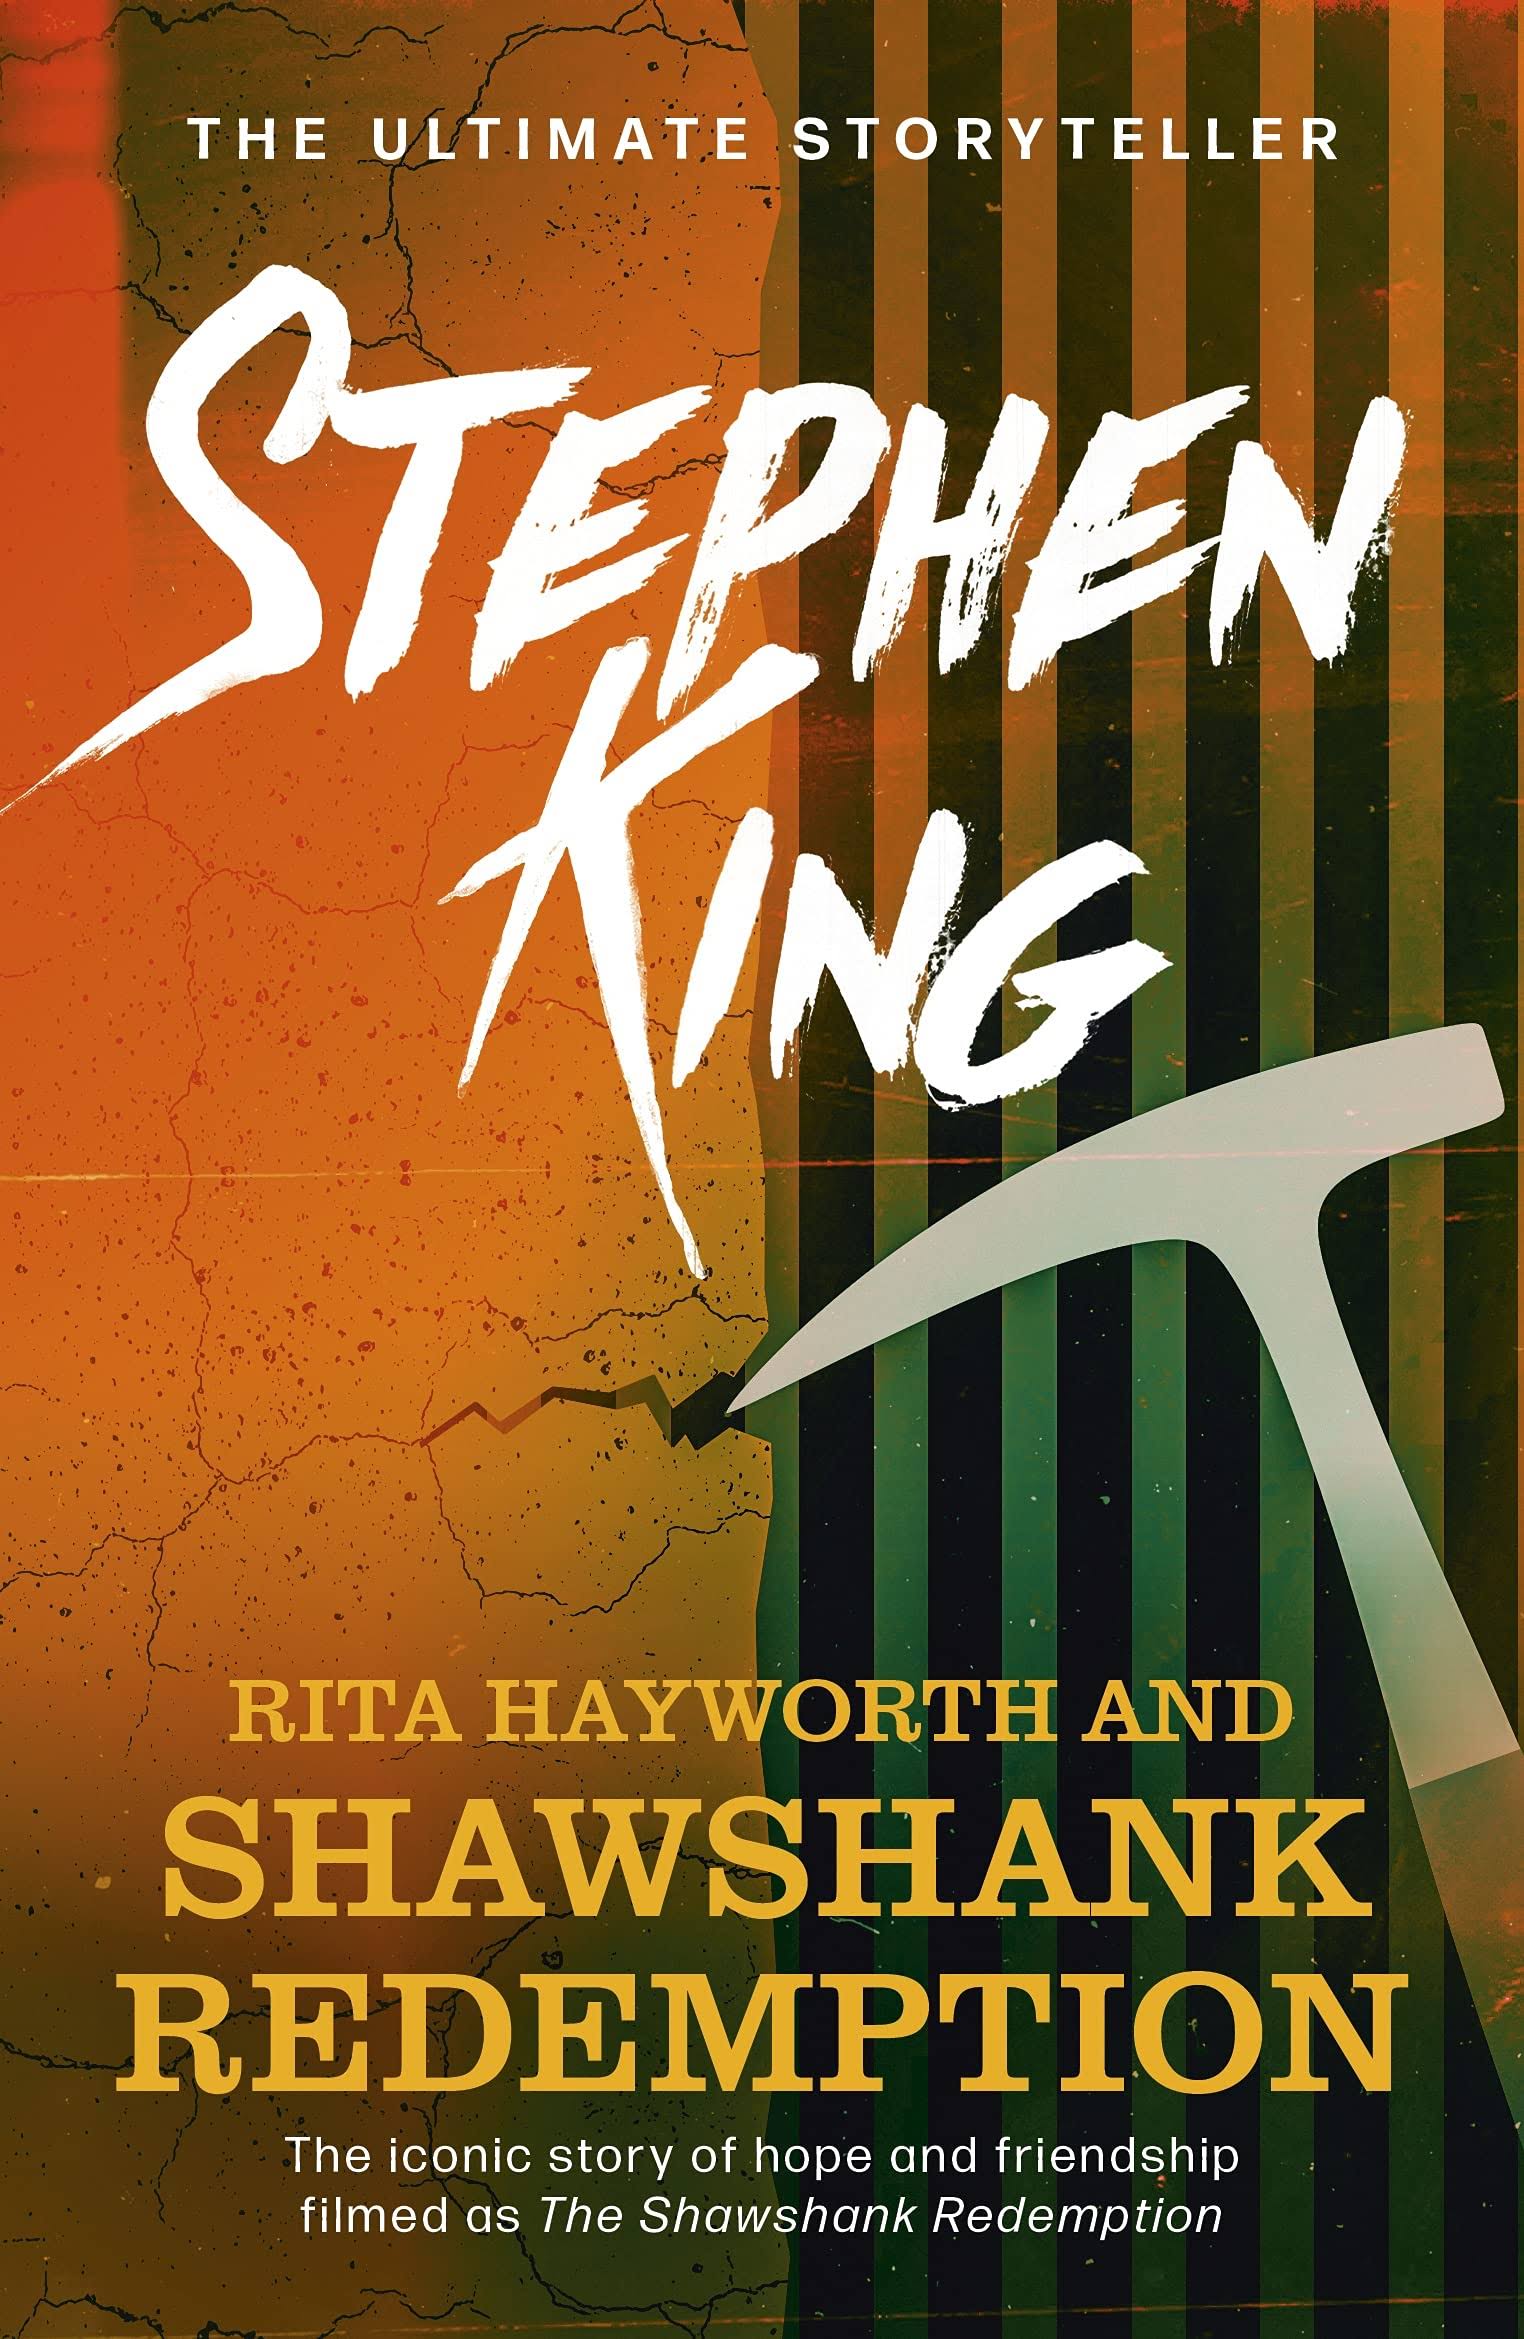 Rita Hayworth and Shawshank Redemption by Stephen King